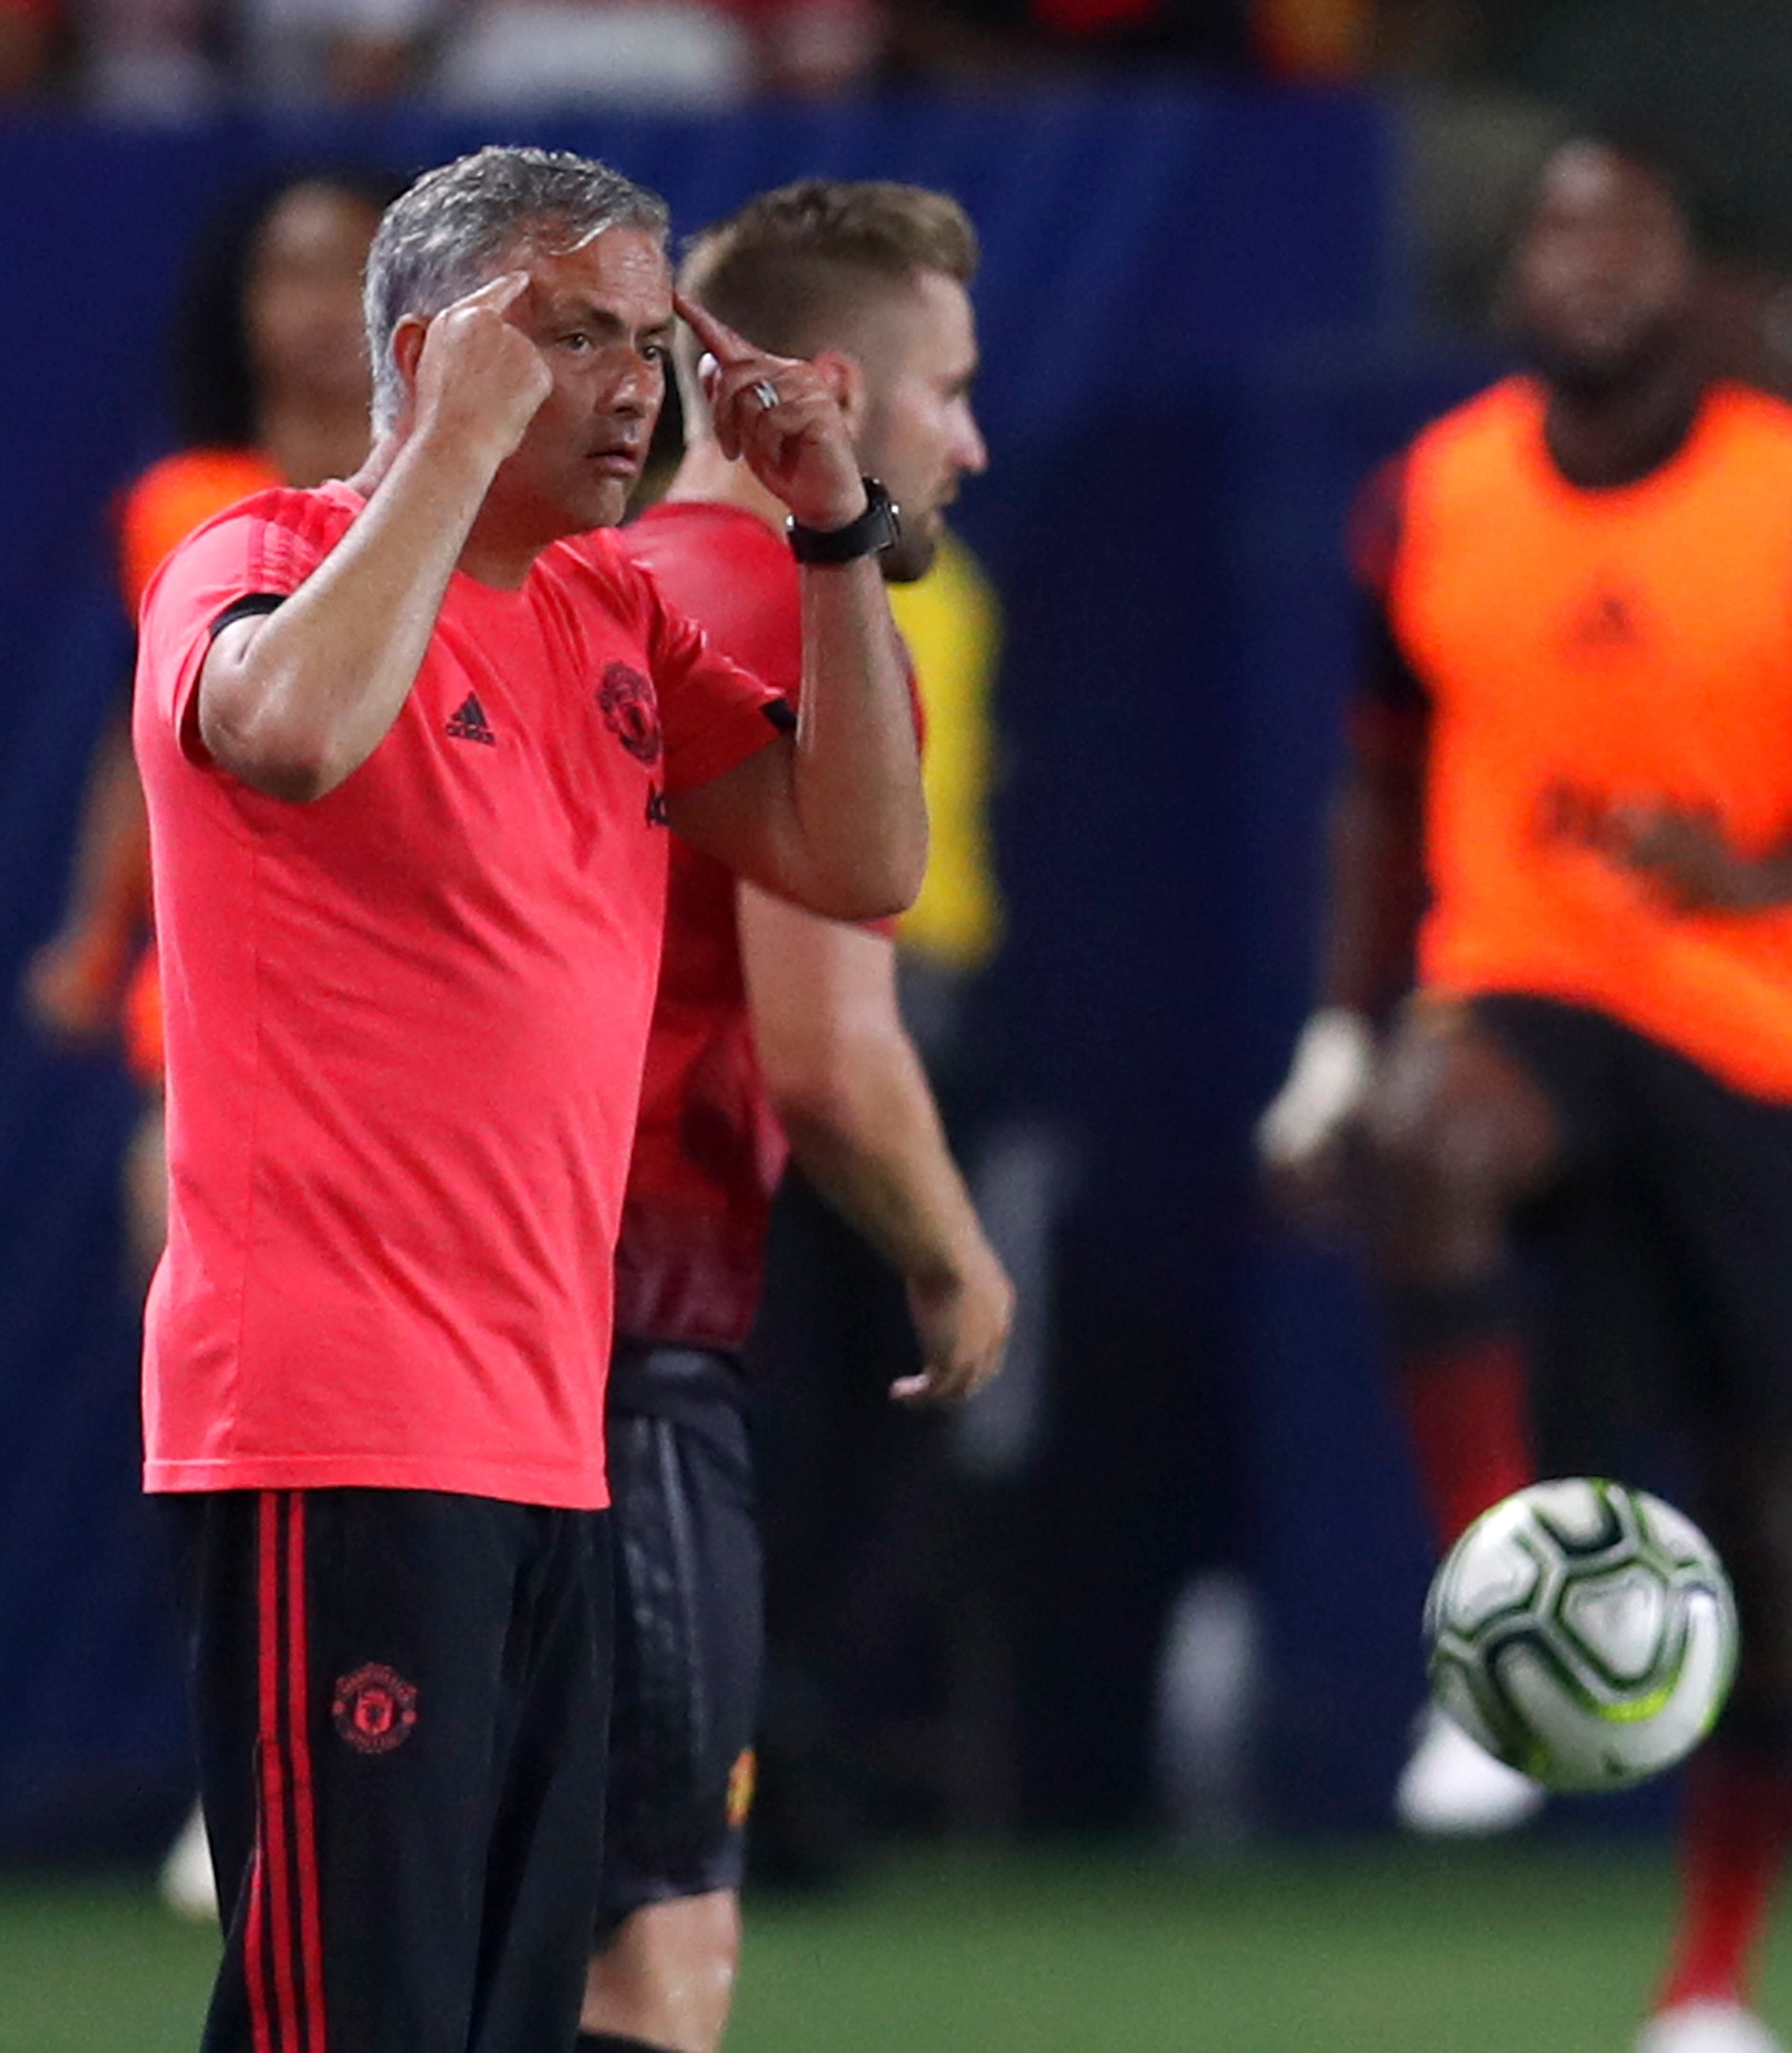 Mourinho, después de caer goleado: "No hubiera gastado mi dinero para ver este partido"